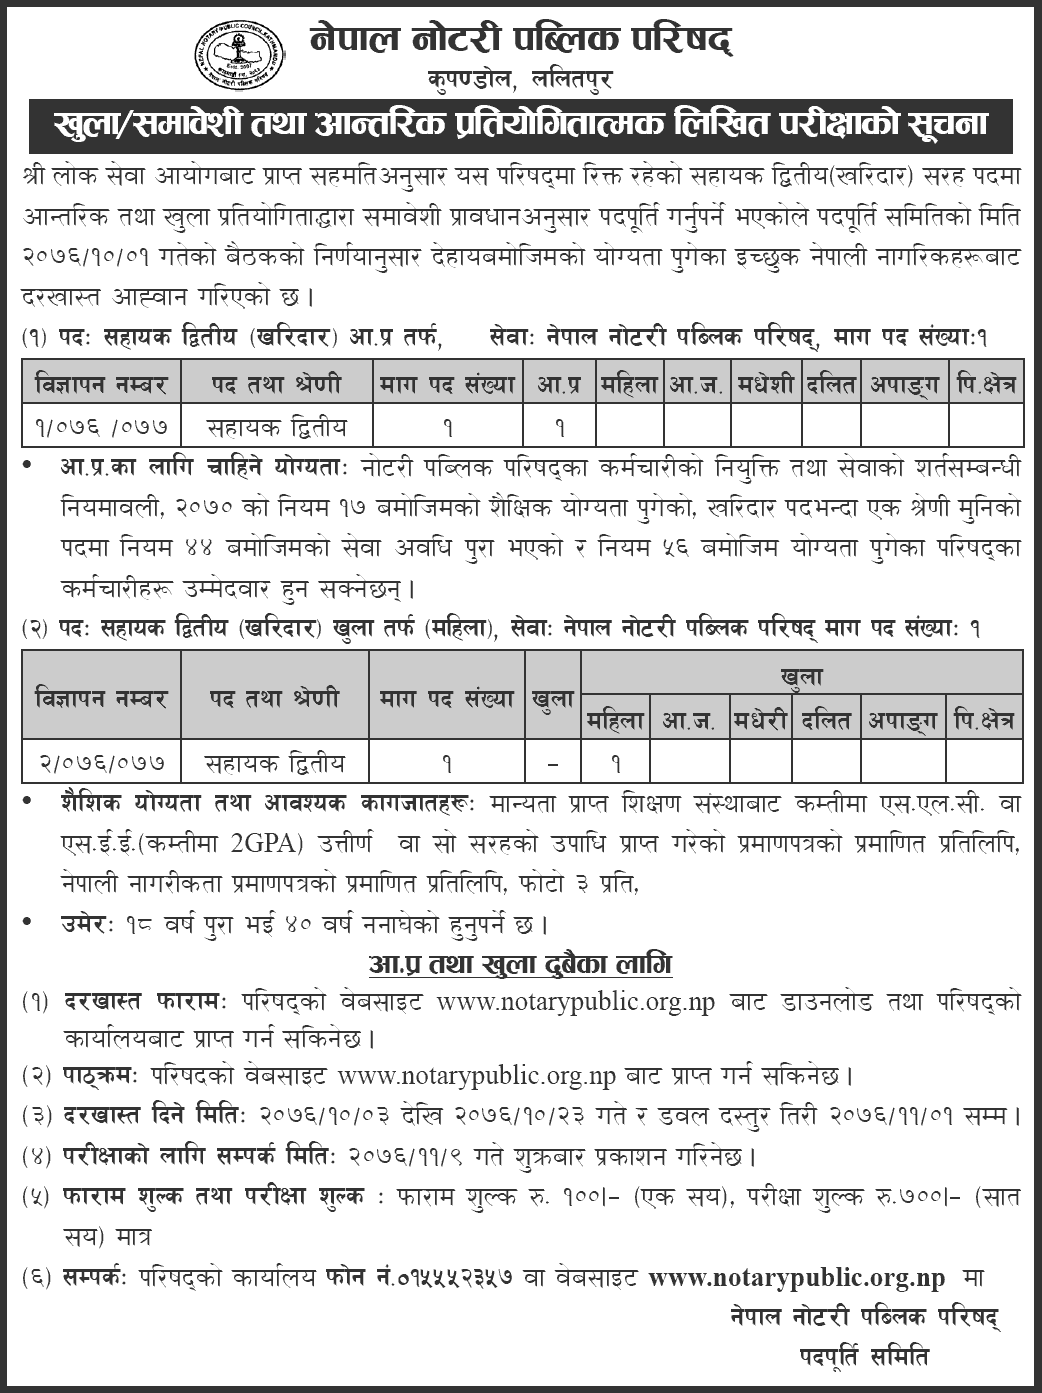 Nepal Notary Public Council Vacancy 2076